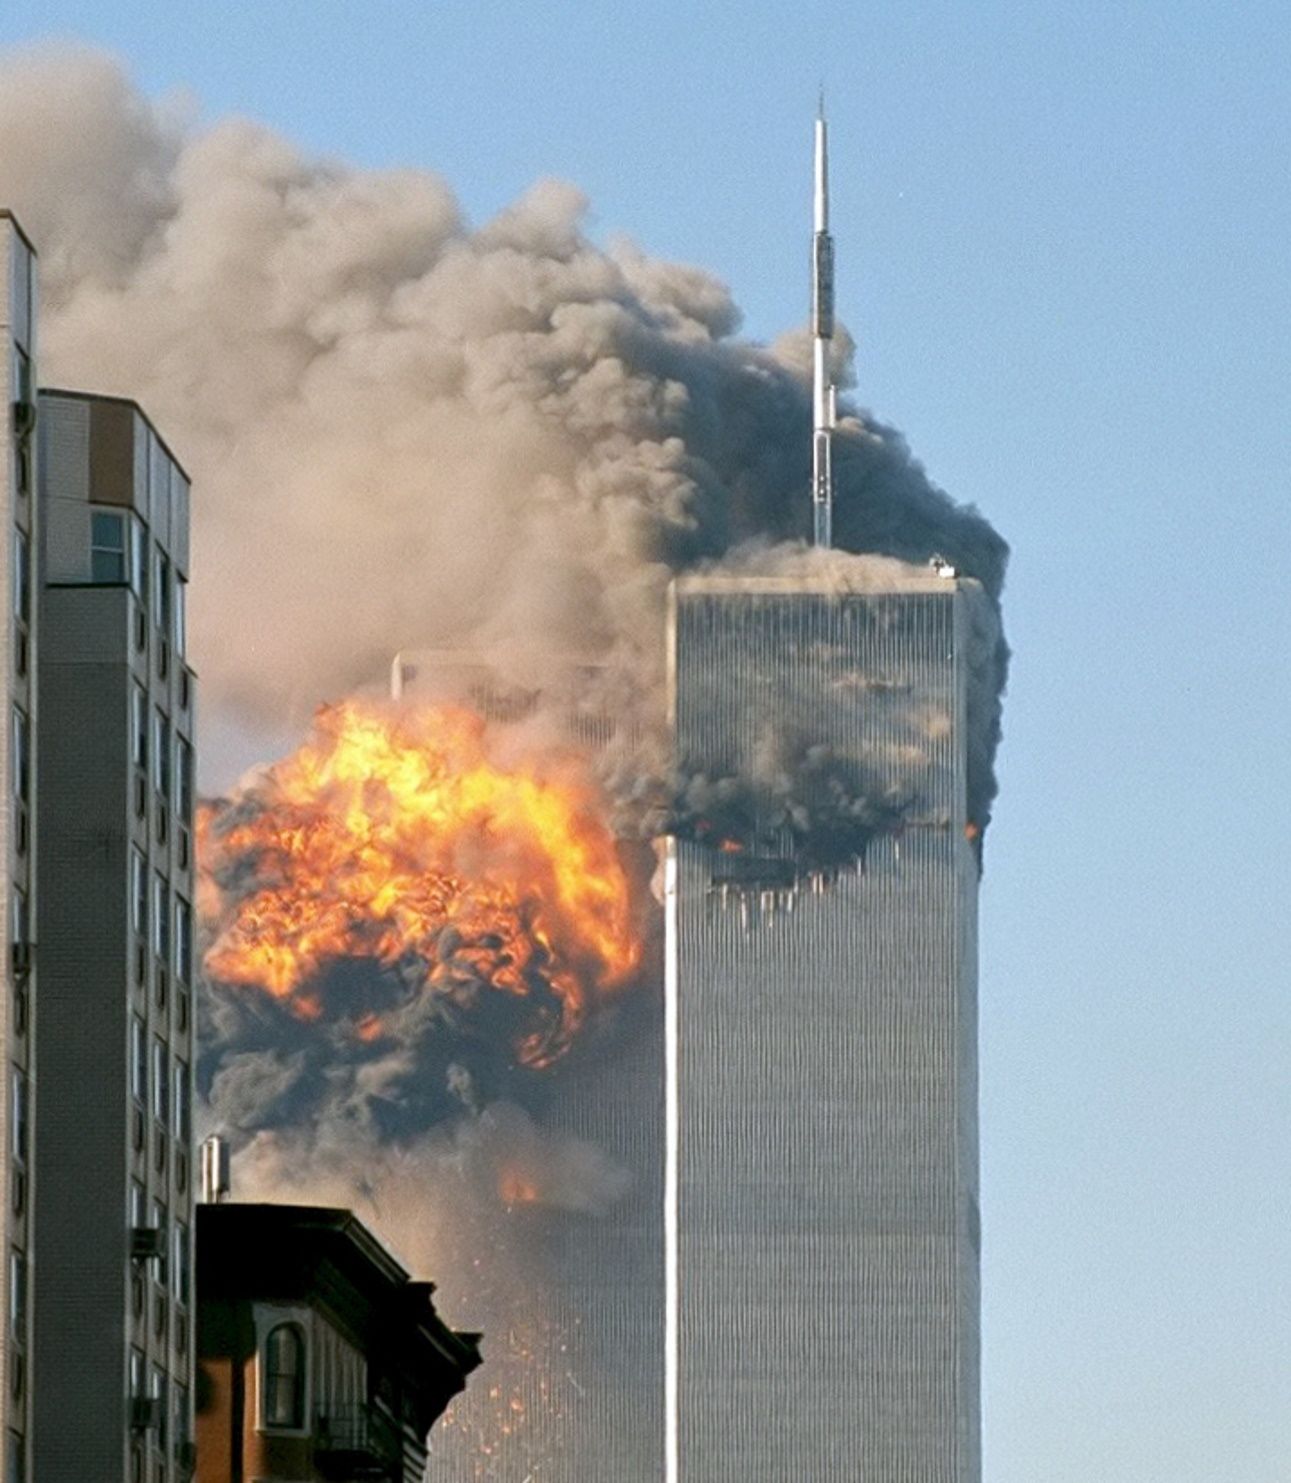 Acusan a un hombre de planear un ataque terrorista parecido al 11-S / Wikimedia Commons - flickr